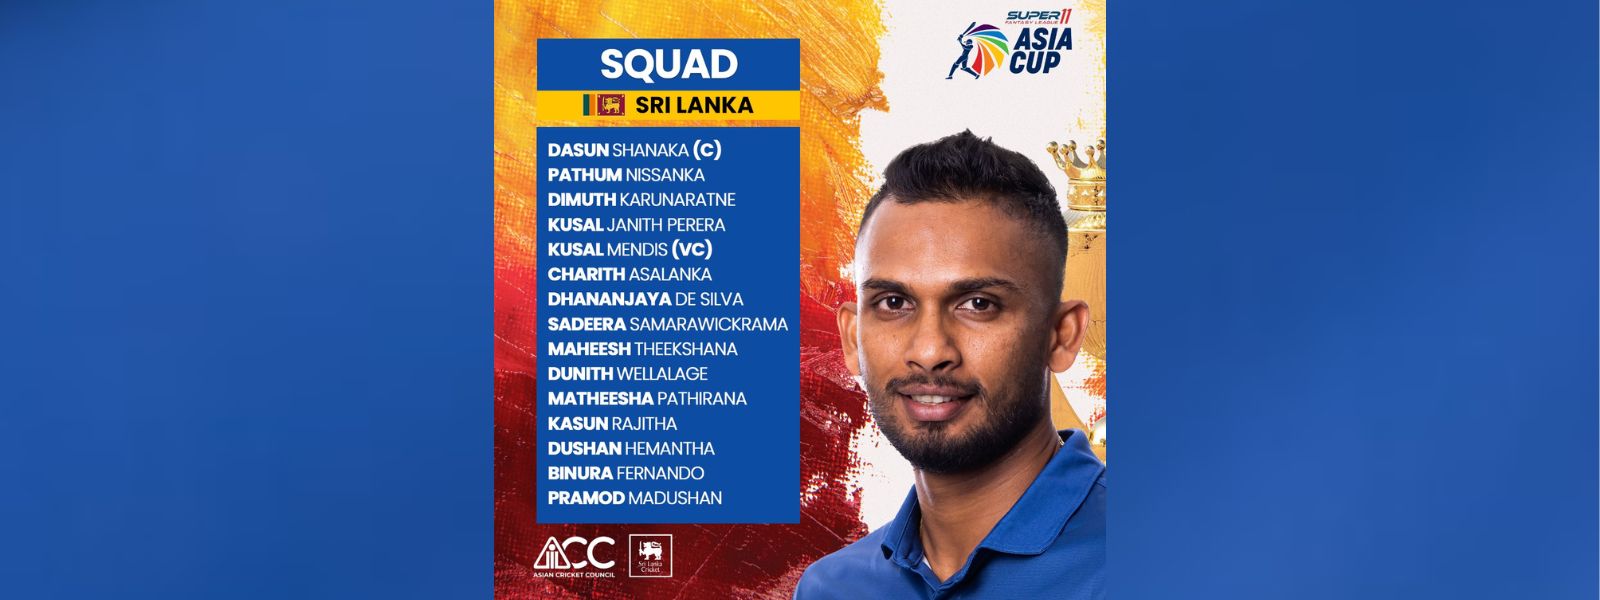 Sri Lanka Cricket announces squad for Asia Cup